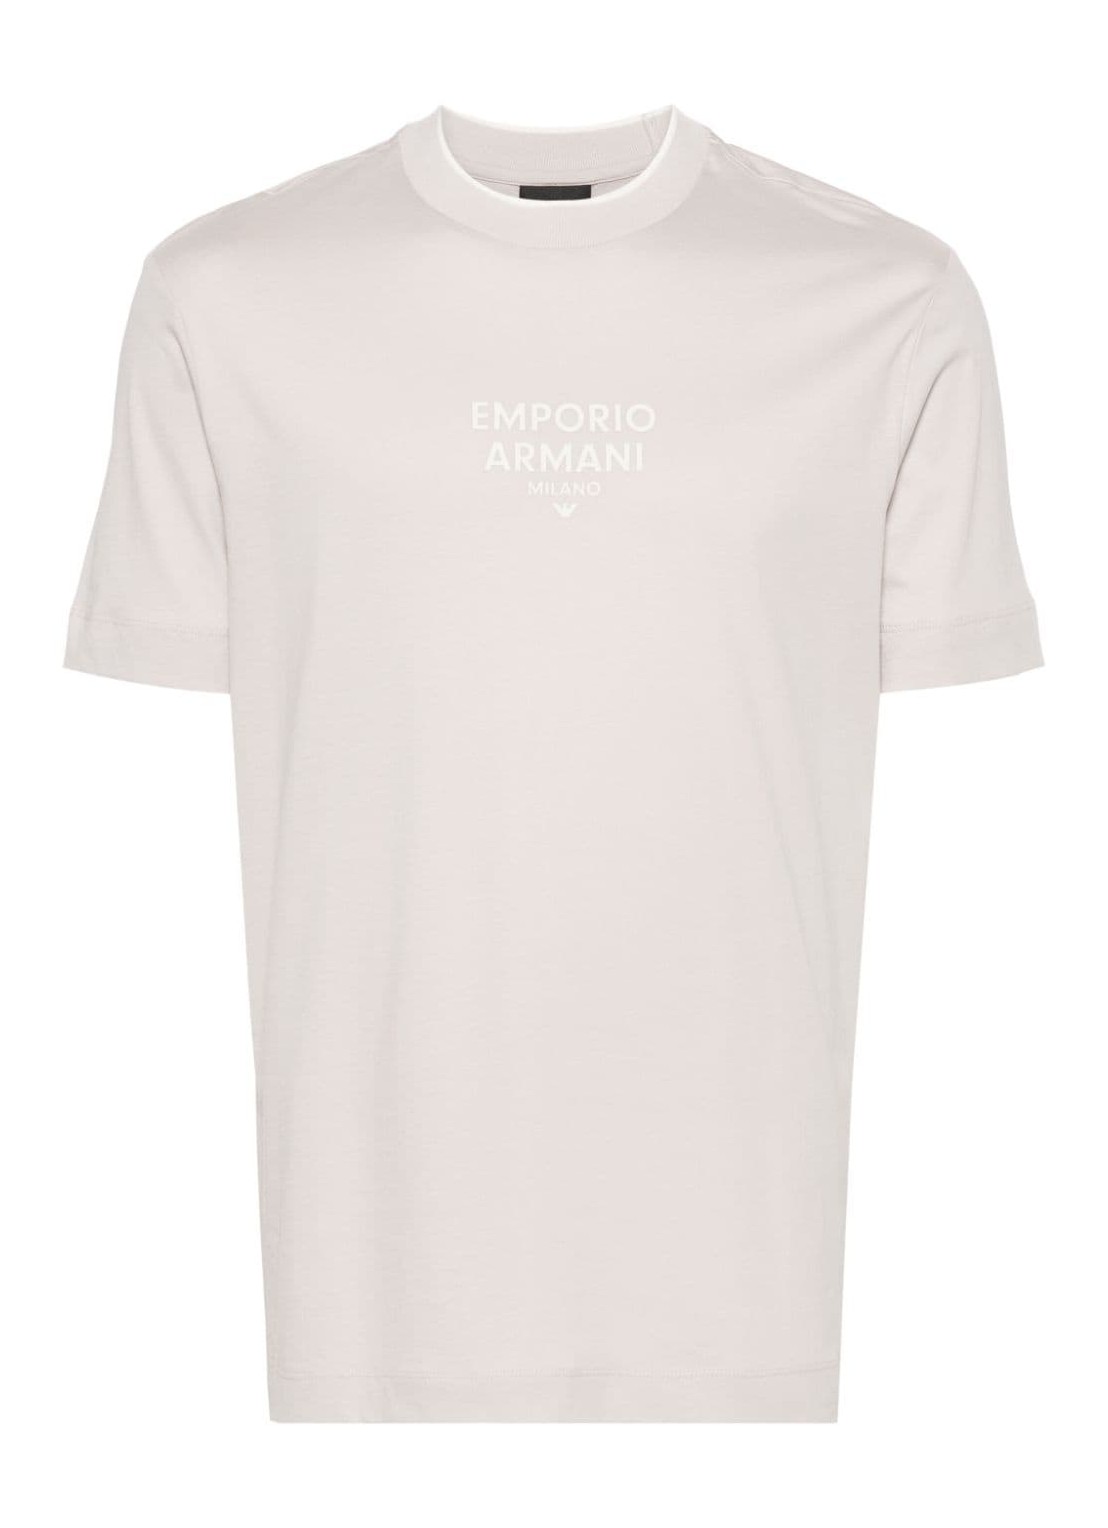 Camiseta emporio armani t-shirt mant73 - 3d1t731jpzz 06h6 talla gris
 